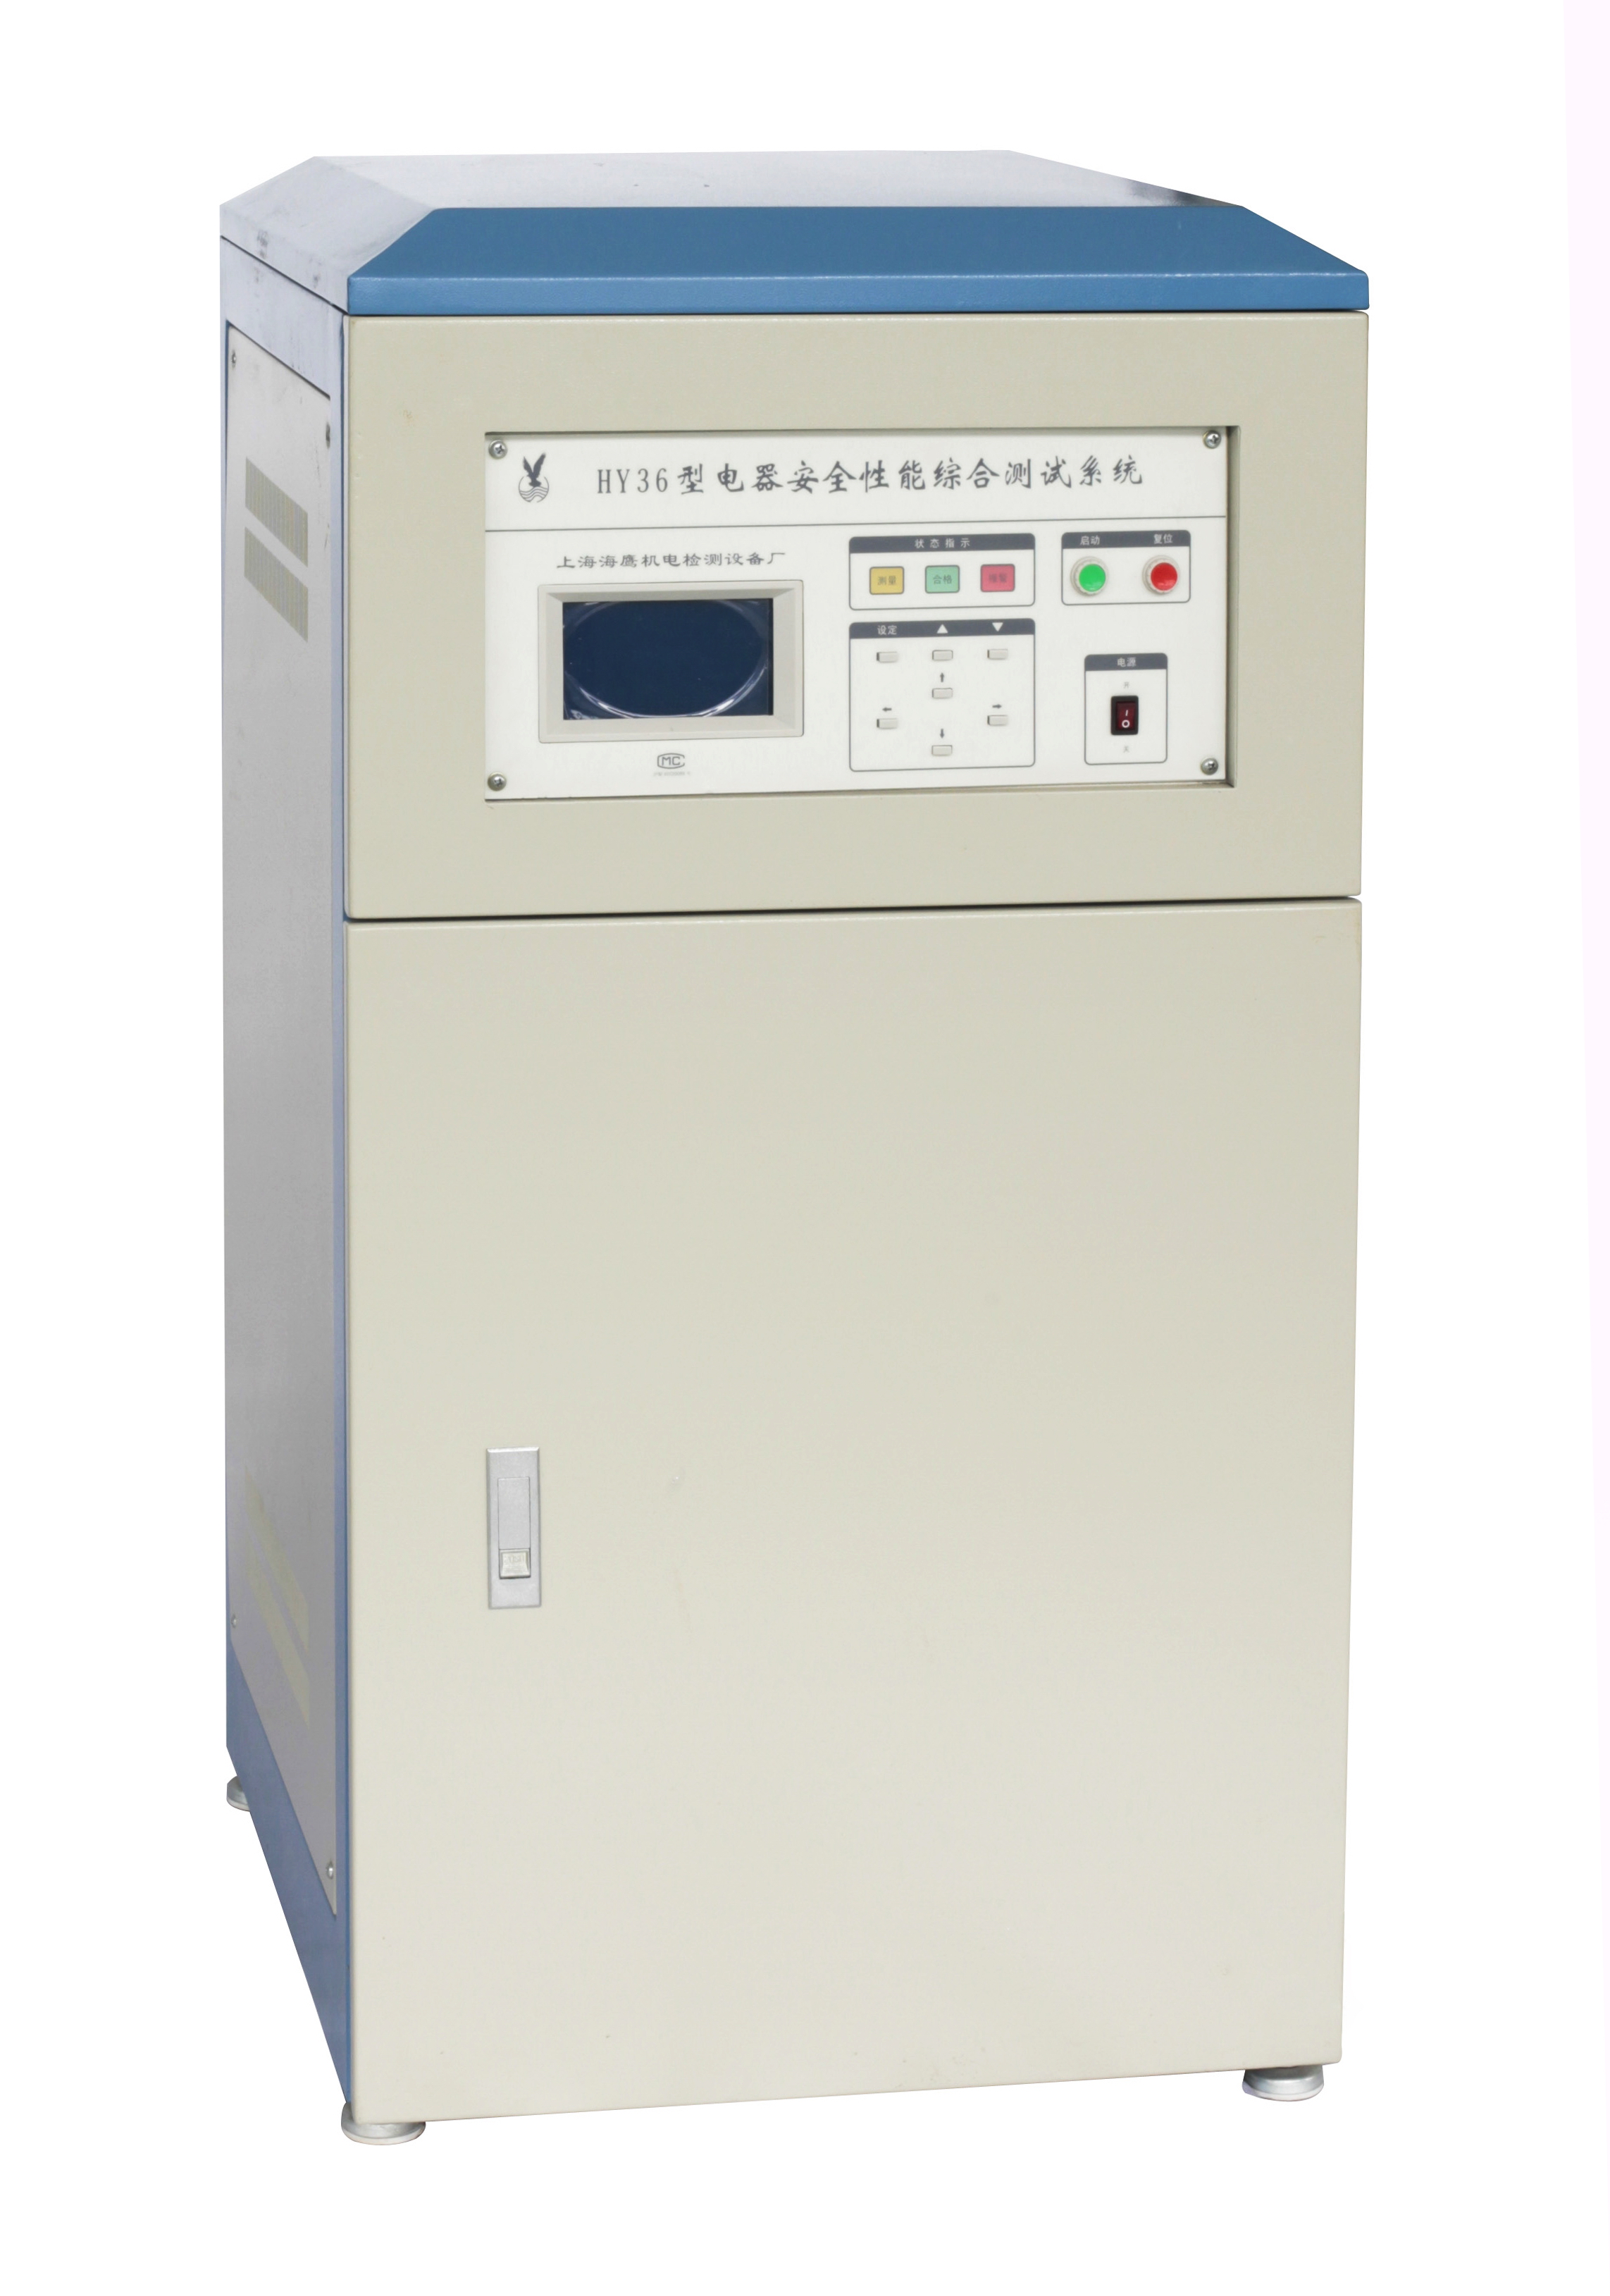 HY36系列电器安全性能（安规）综合测试系统